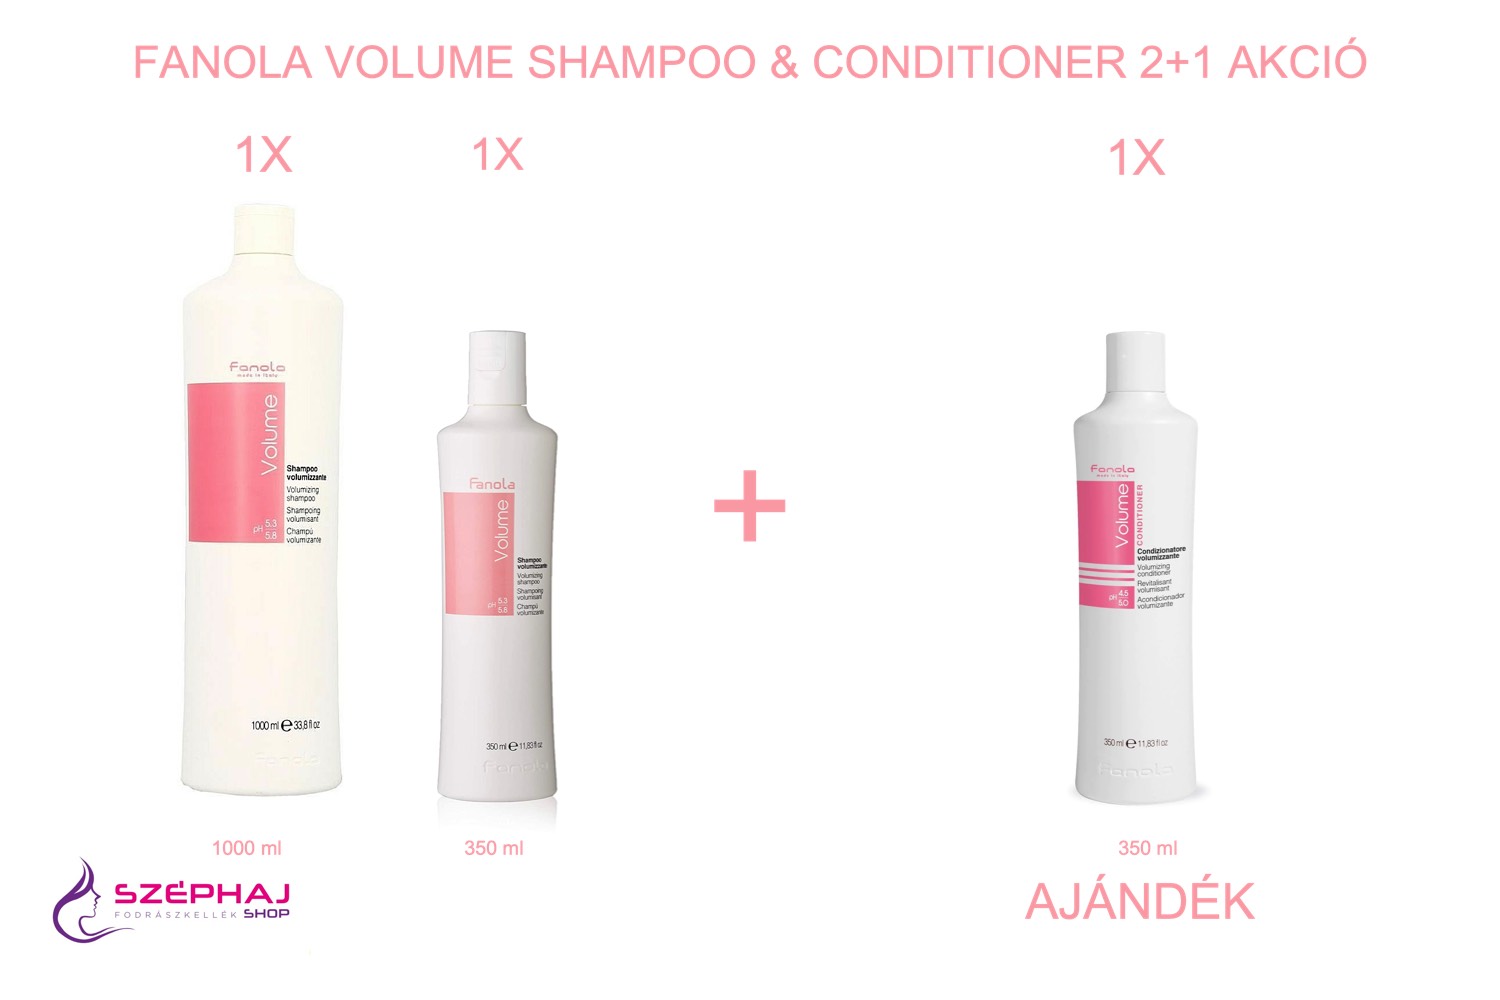 FANOLA Volume Shampoo 2+1 AKCIÓ